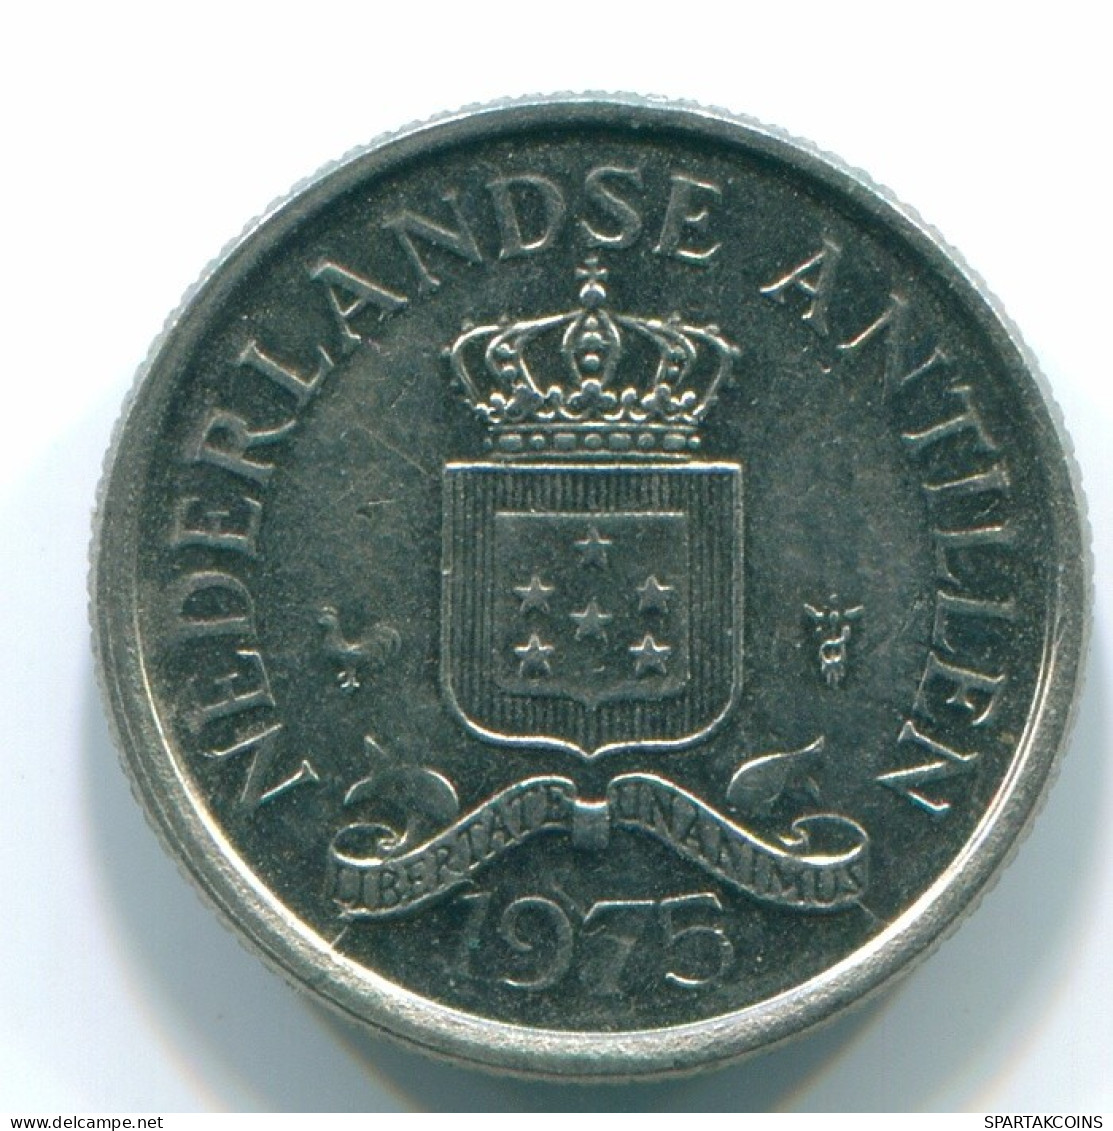 10 CENTS 1976 NETHERLANDS ANTILLES Nickel Colonial Coin #S13737.U.A - Antilles Néerlandaises